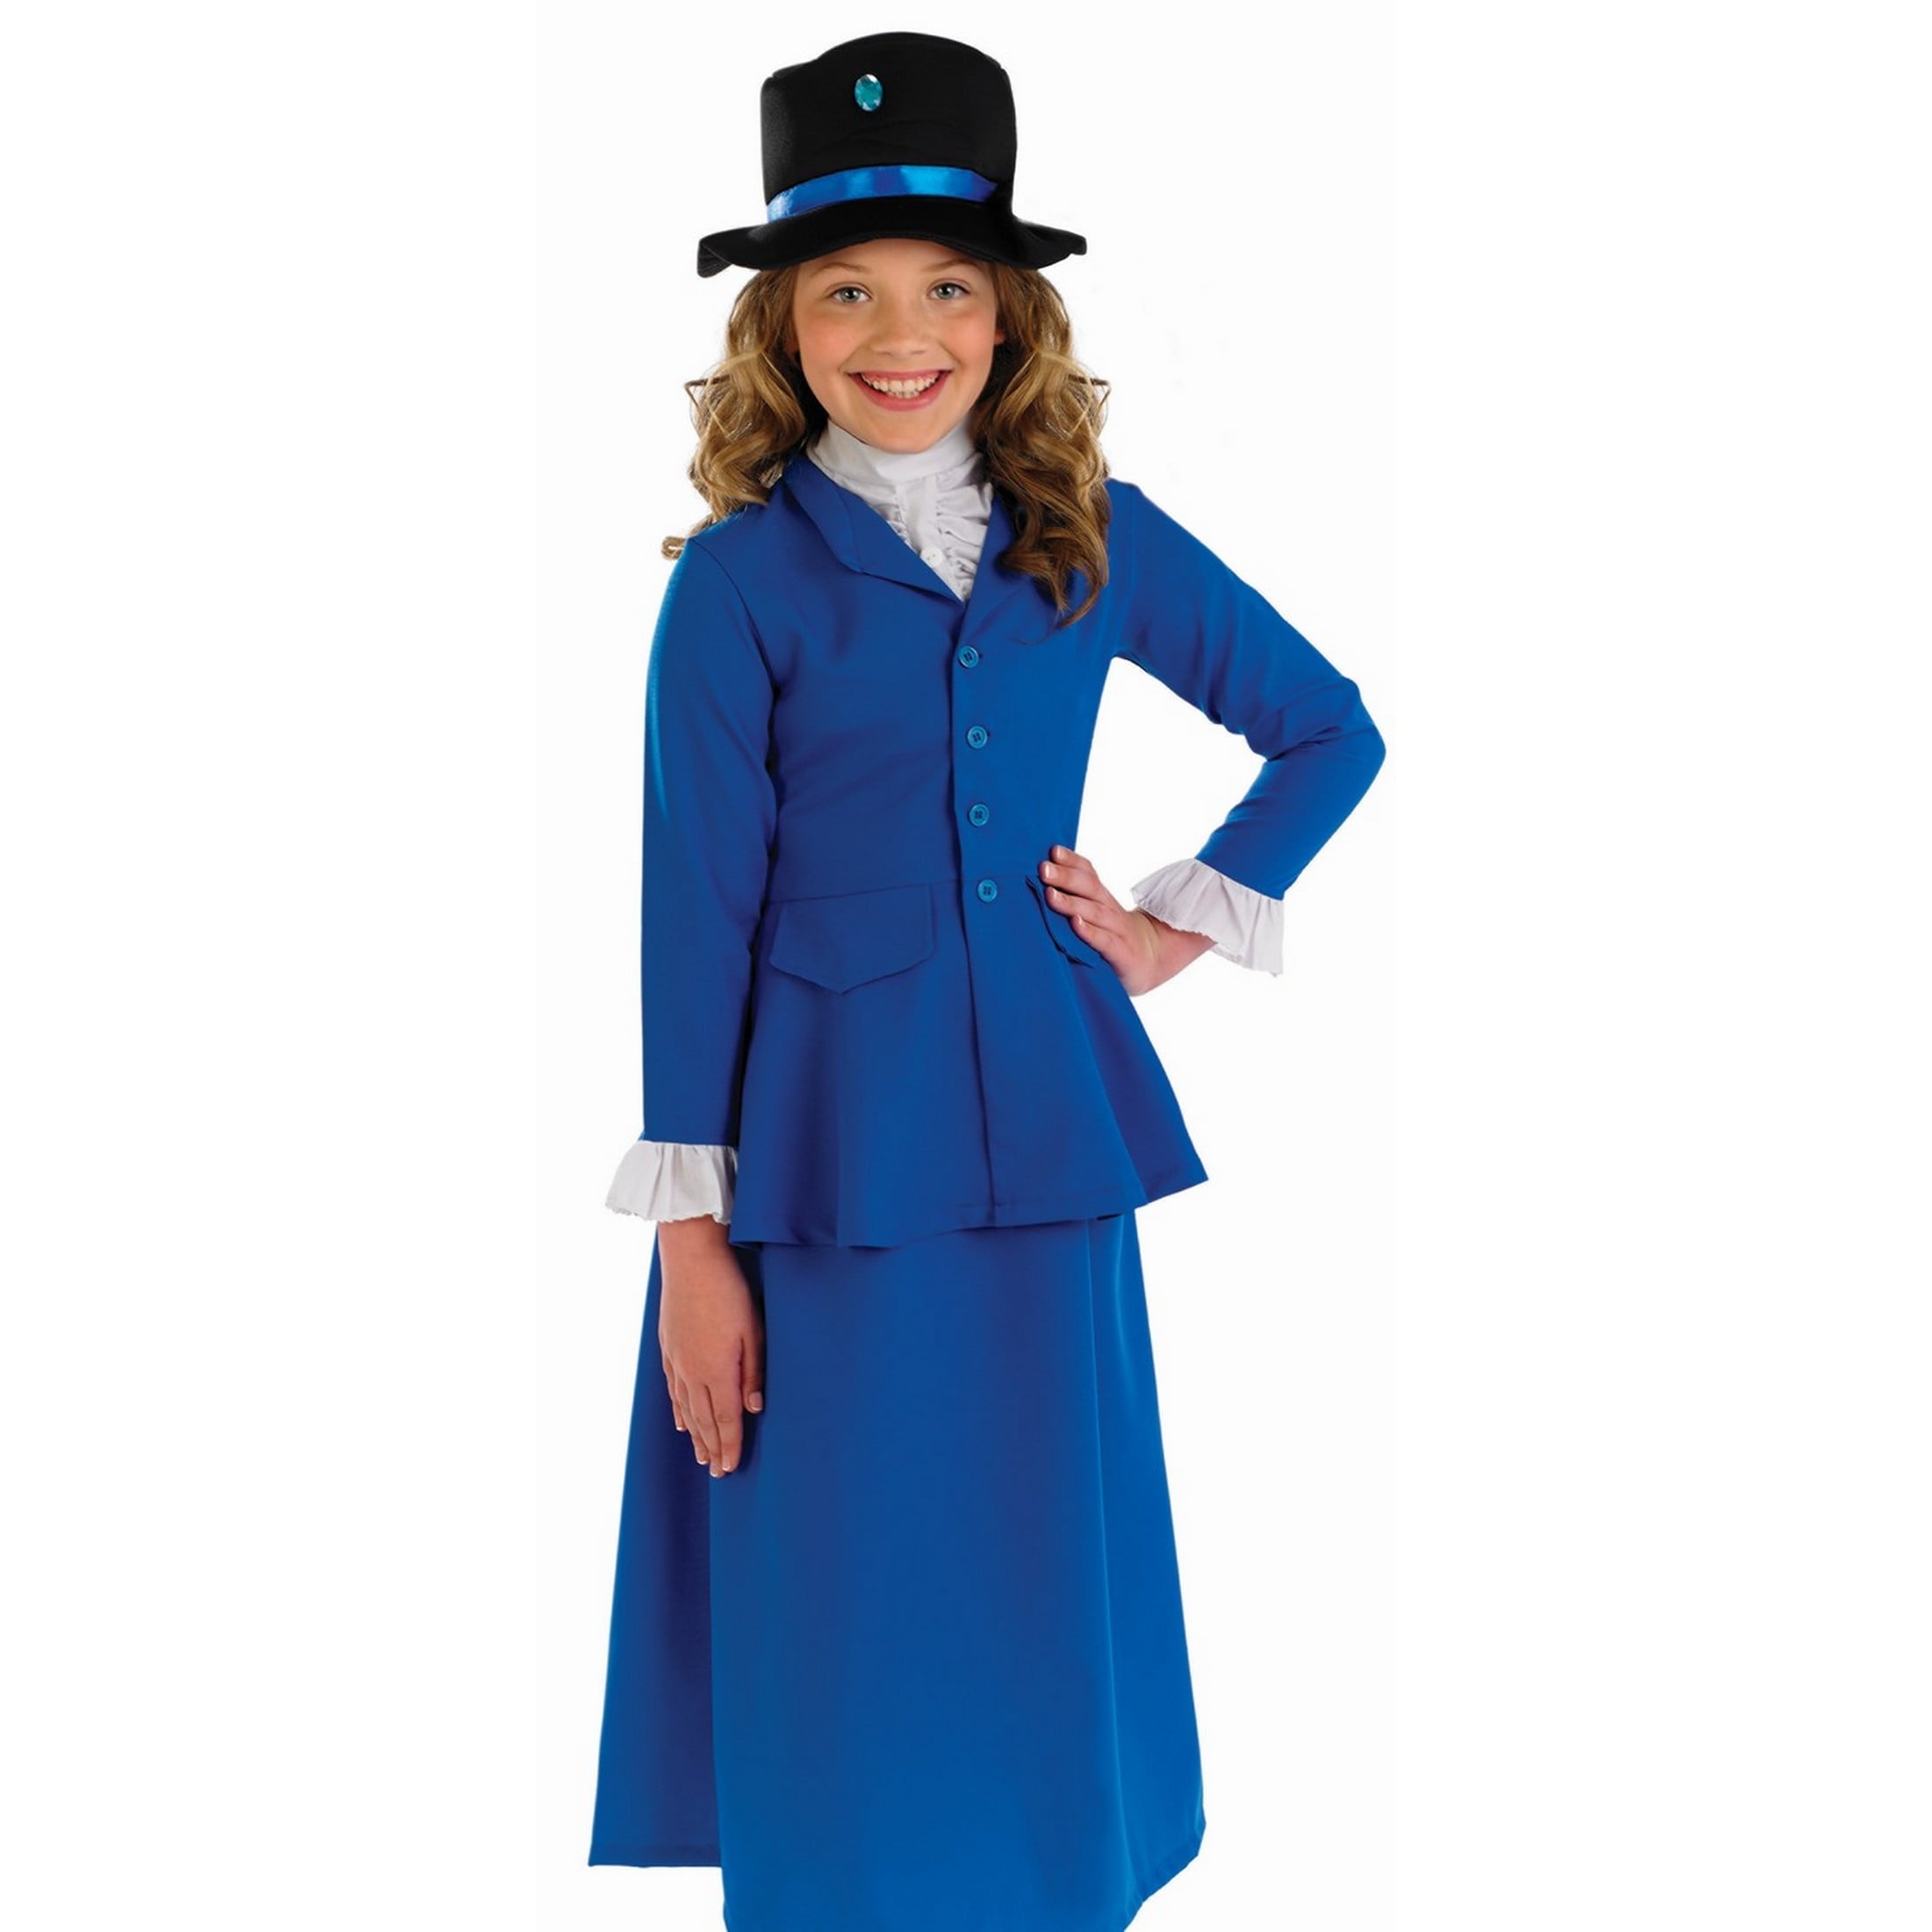 Dress Up America Band Majorette Costume - Nutcracker Costume for Girls -  Toy Soldier Uniform Dress Up for Kids